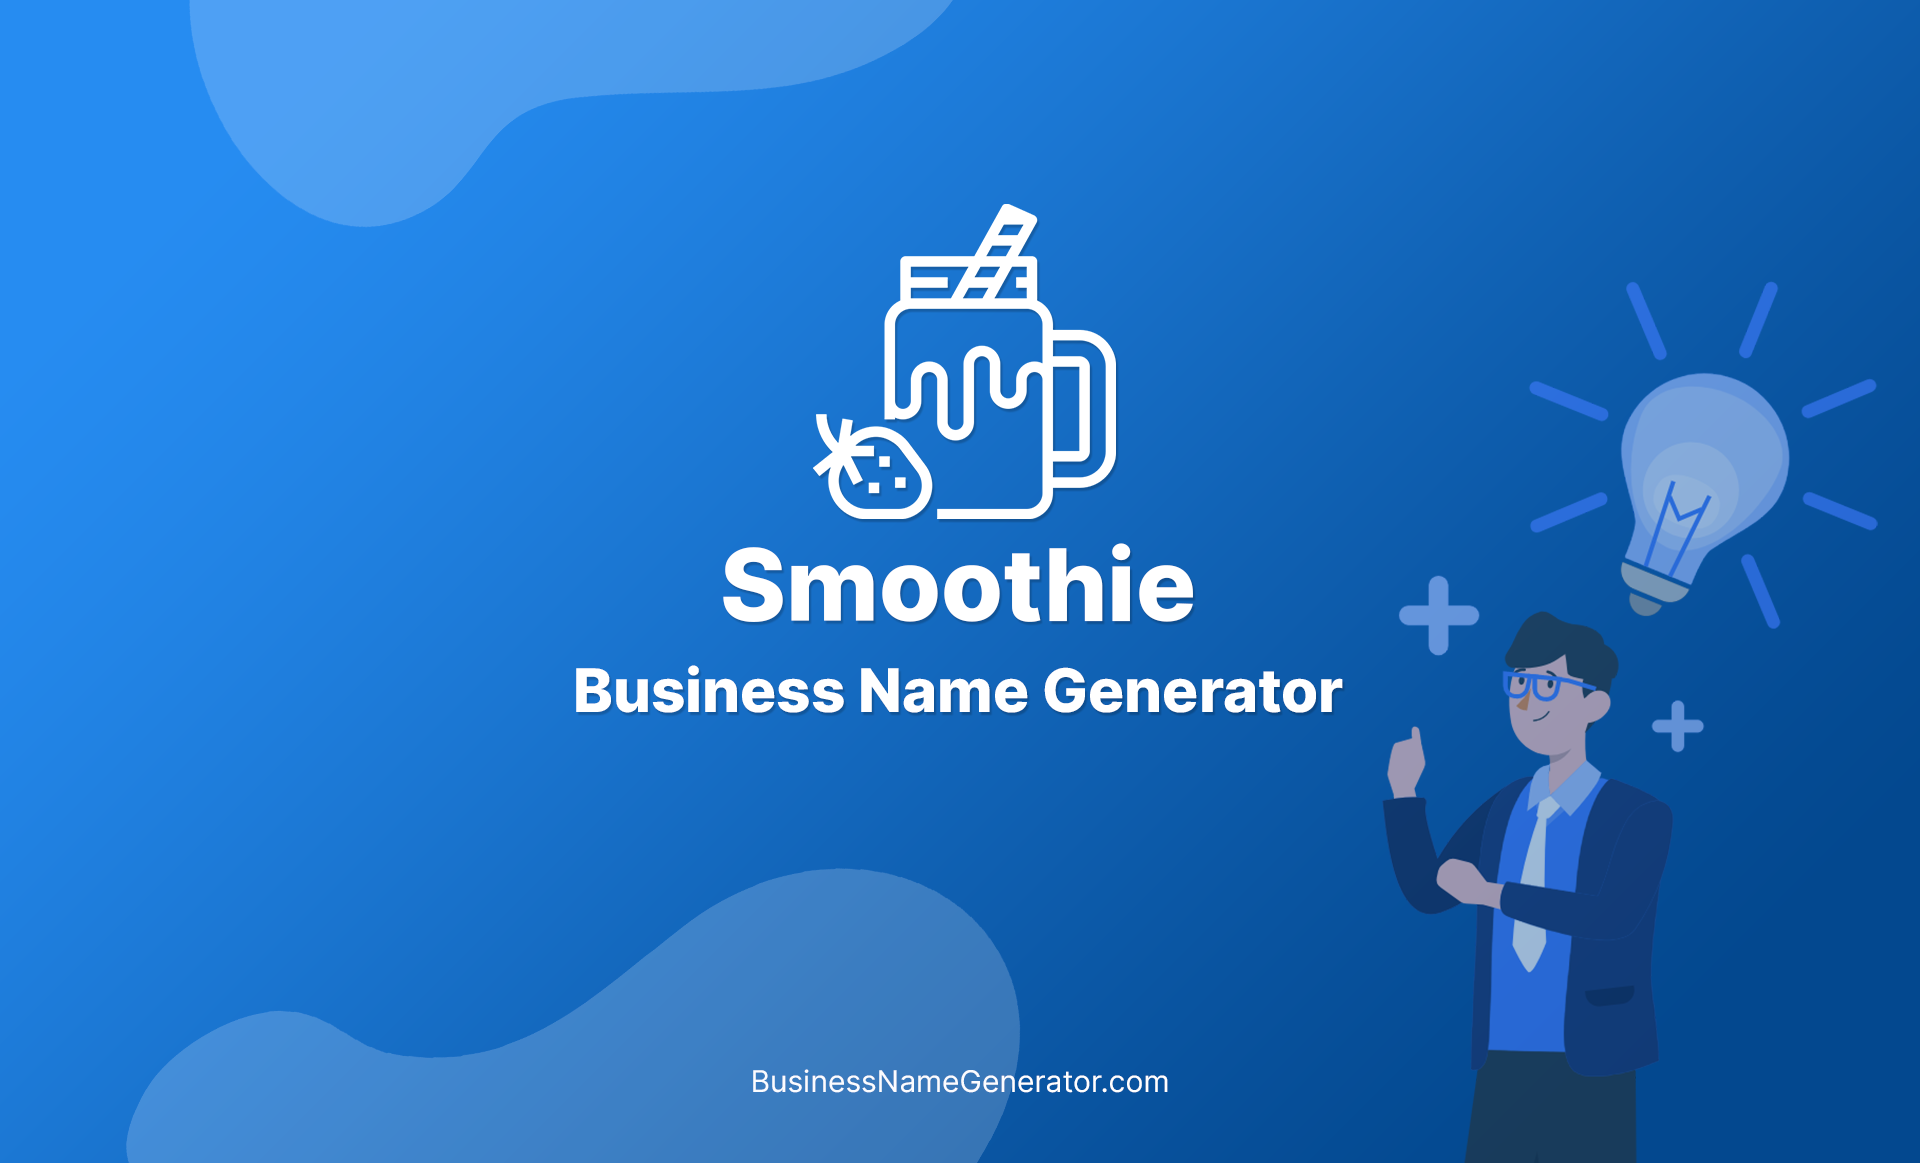 Smoothie Business Name Generator